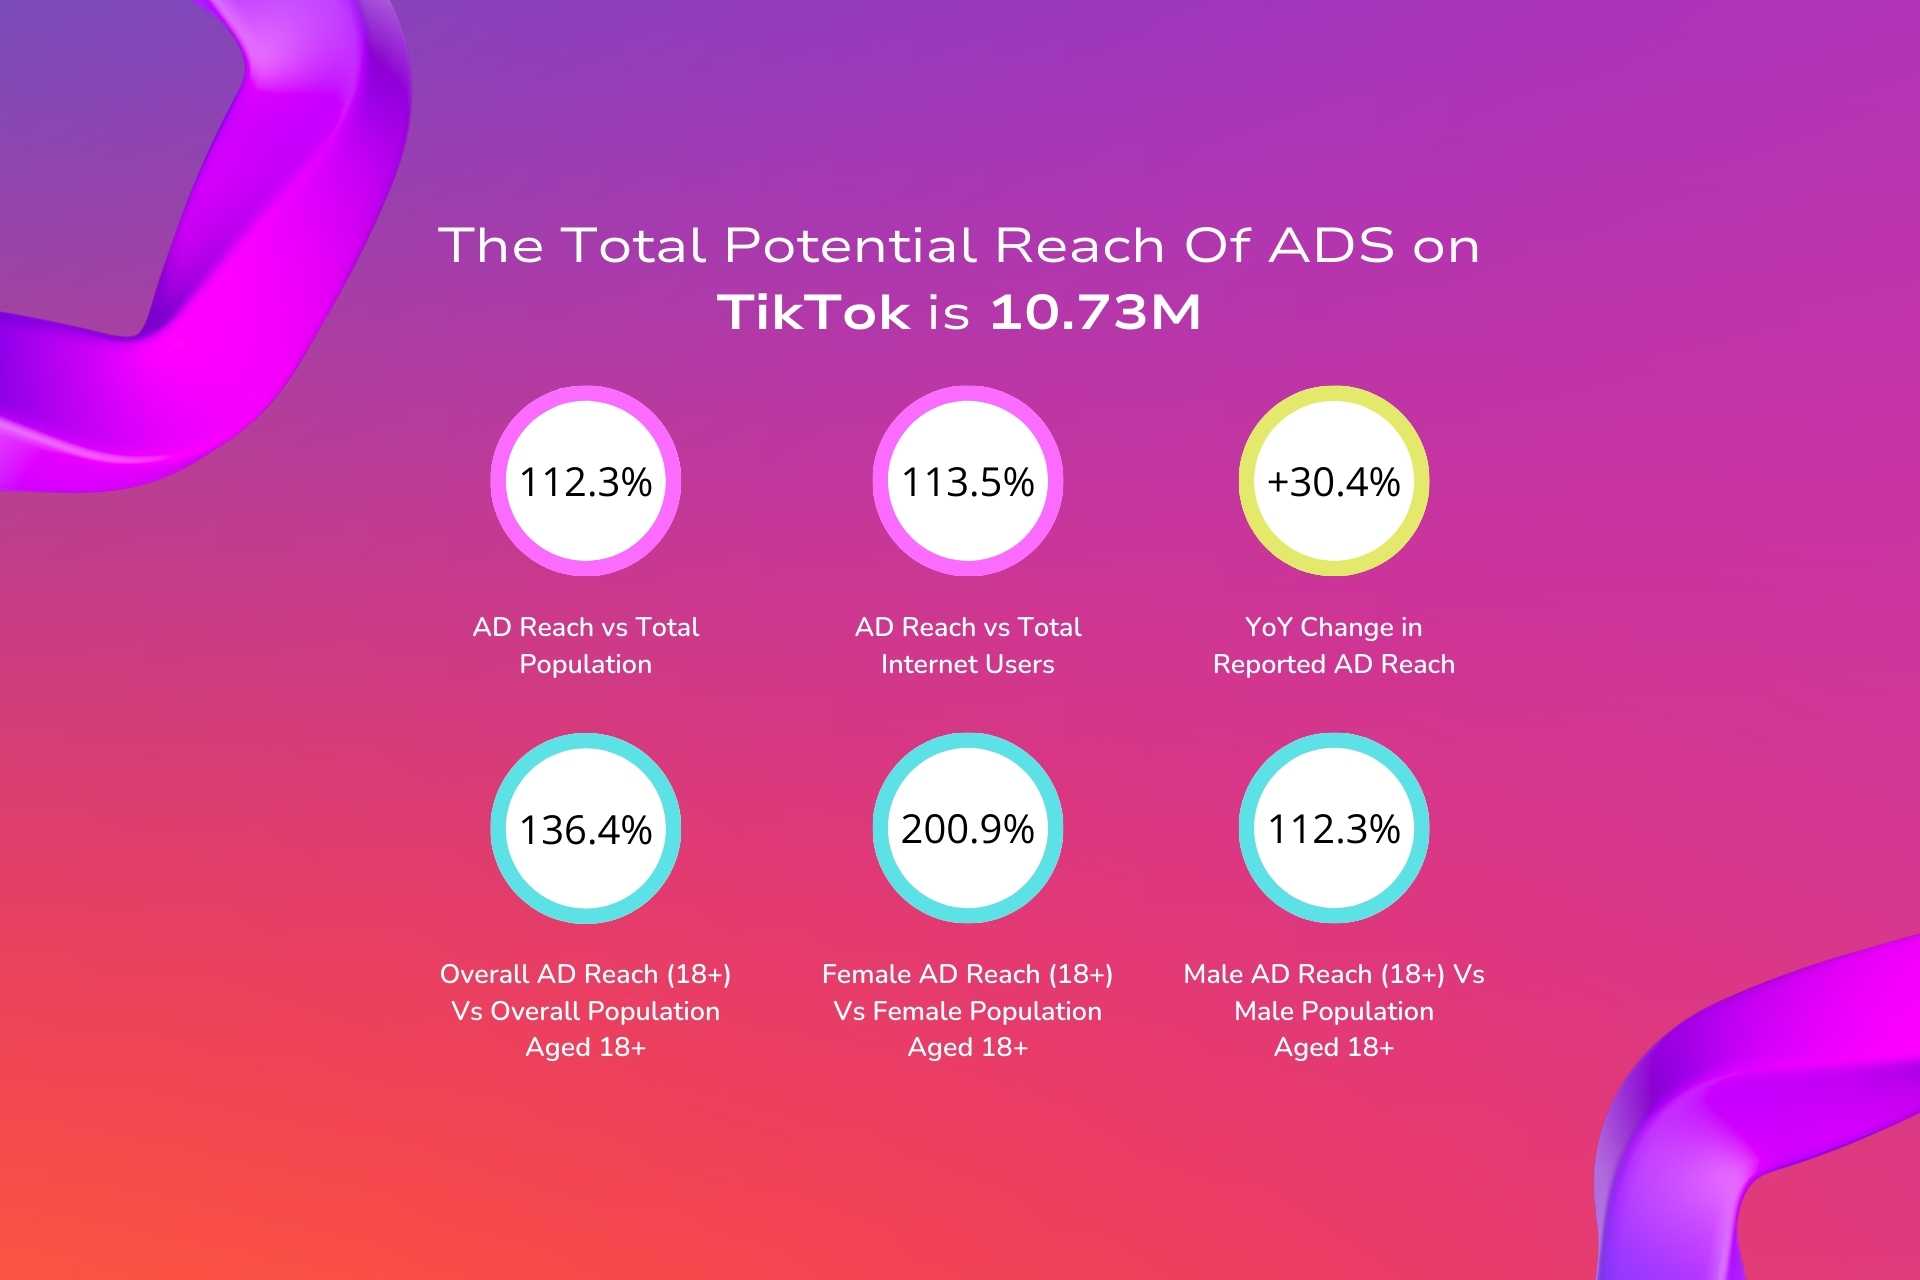 Growth of Social Media in the UAE -ADS on TikTok